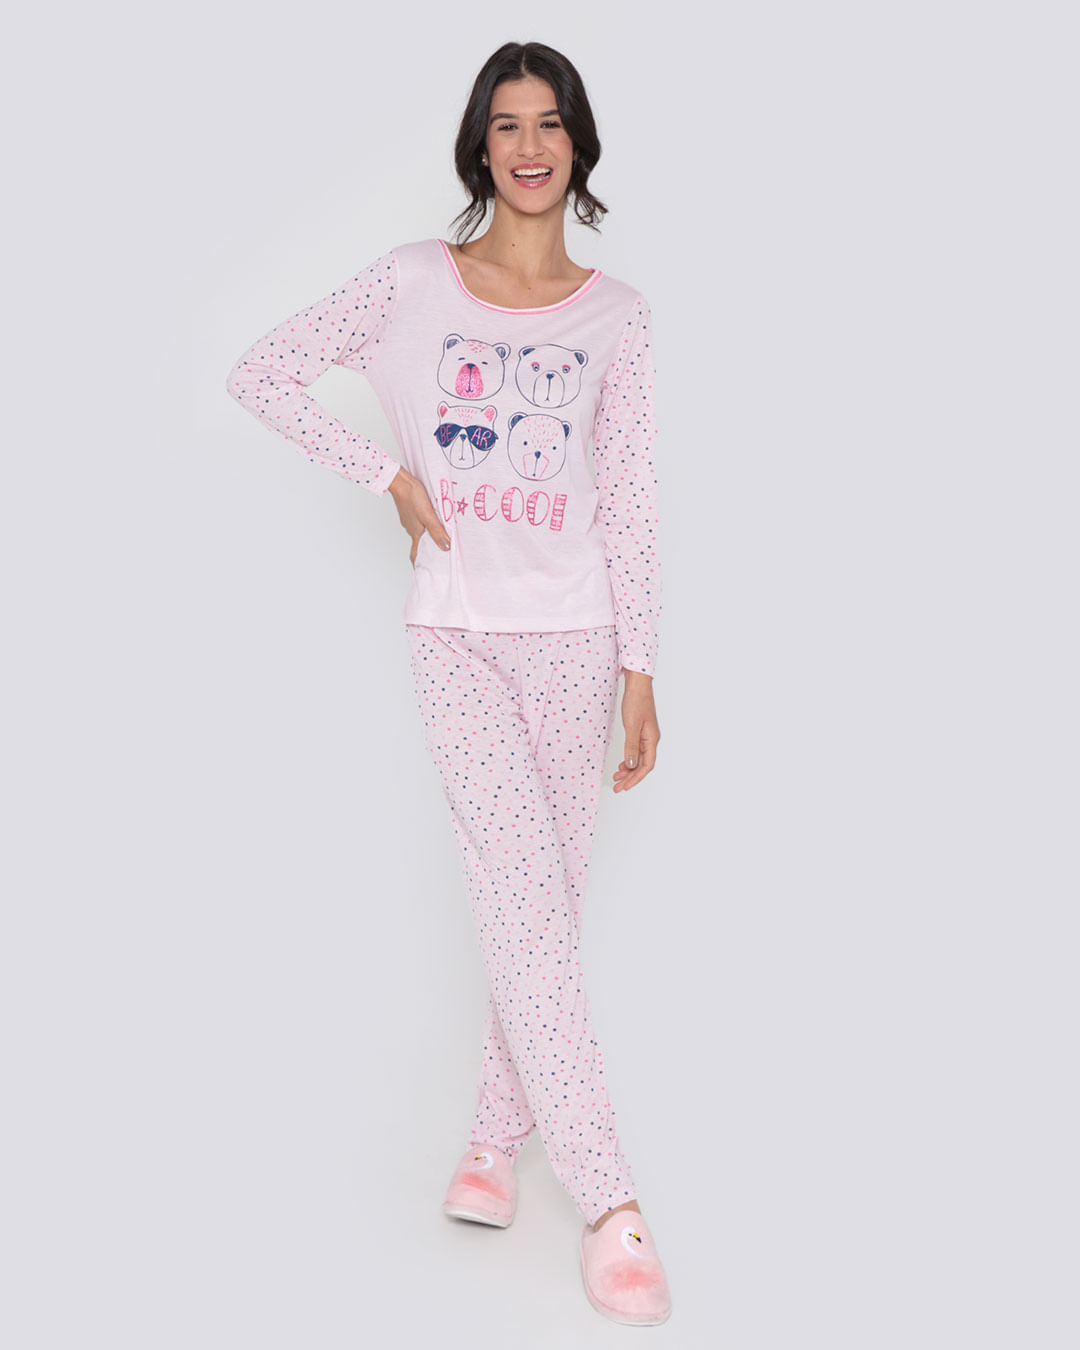 Pijama-Feminino-Longo-Estampa-Ursinhos-Rosa-Claro